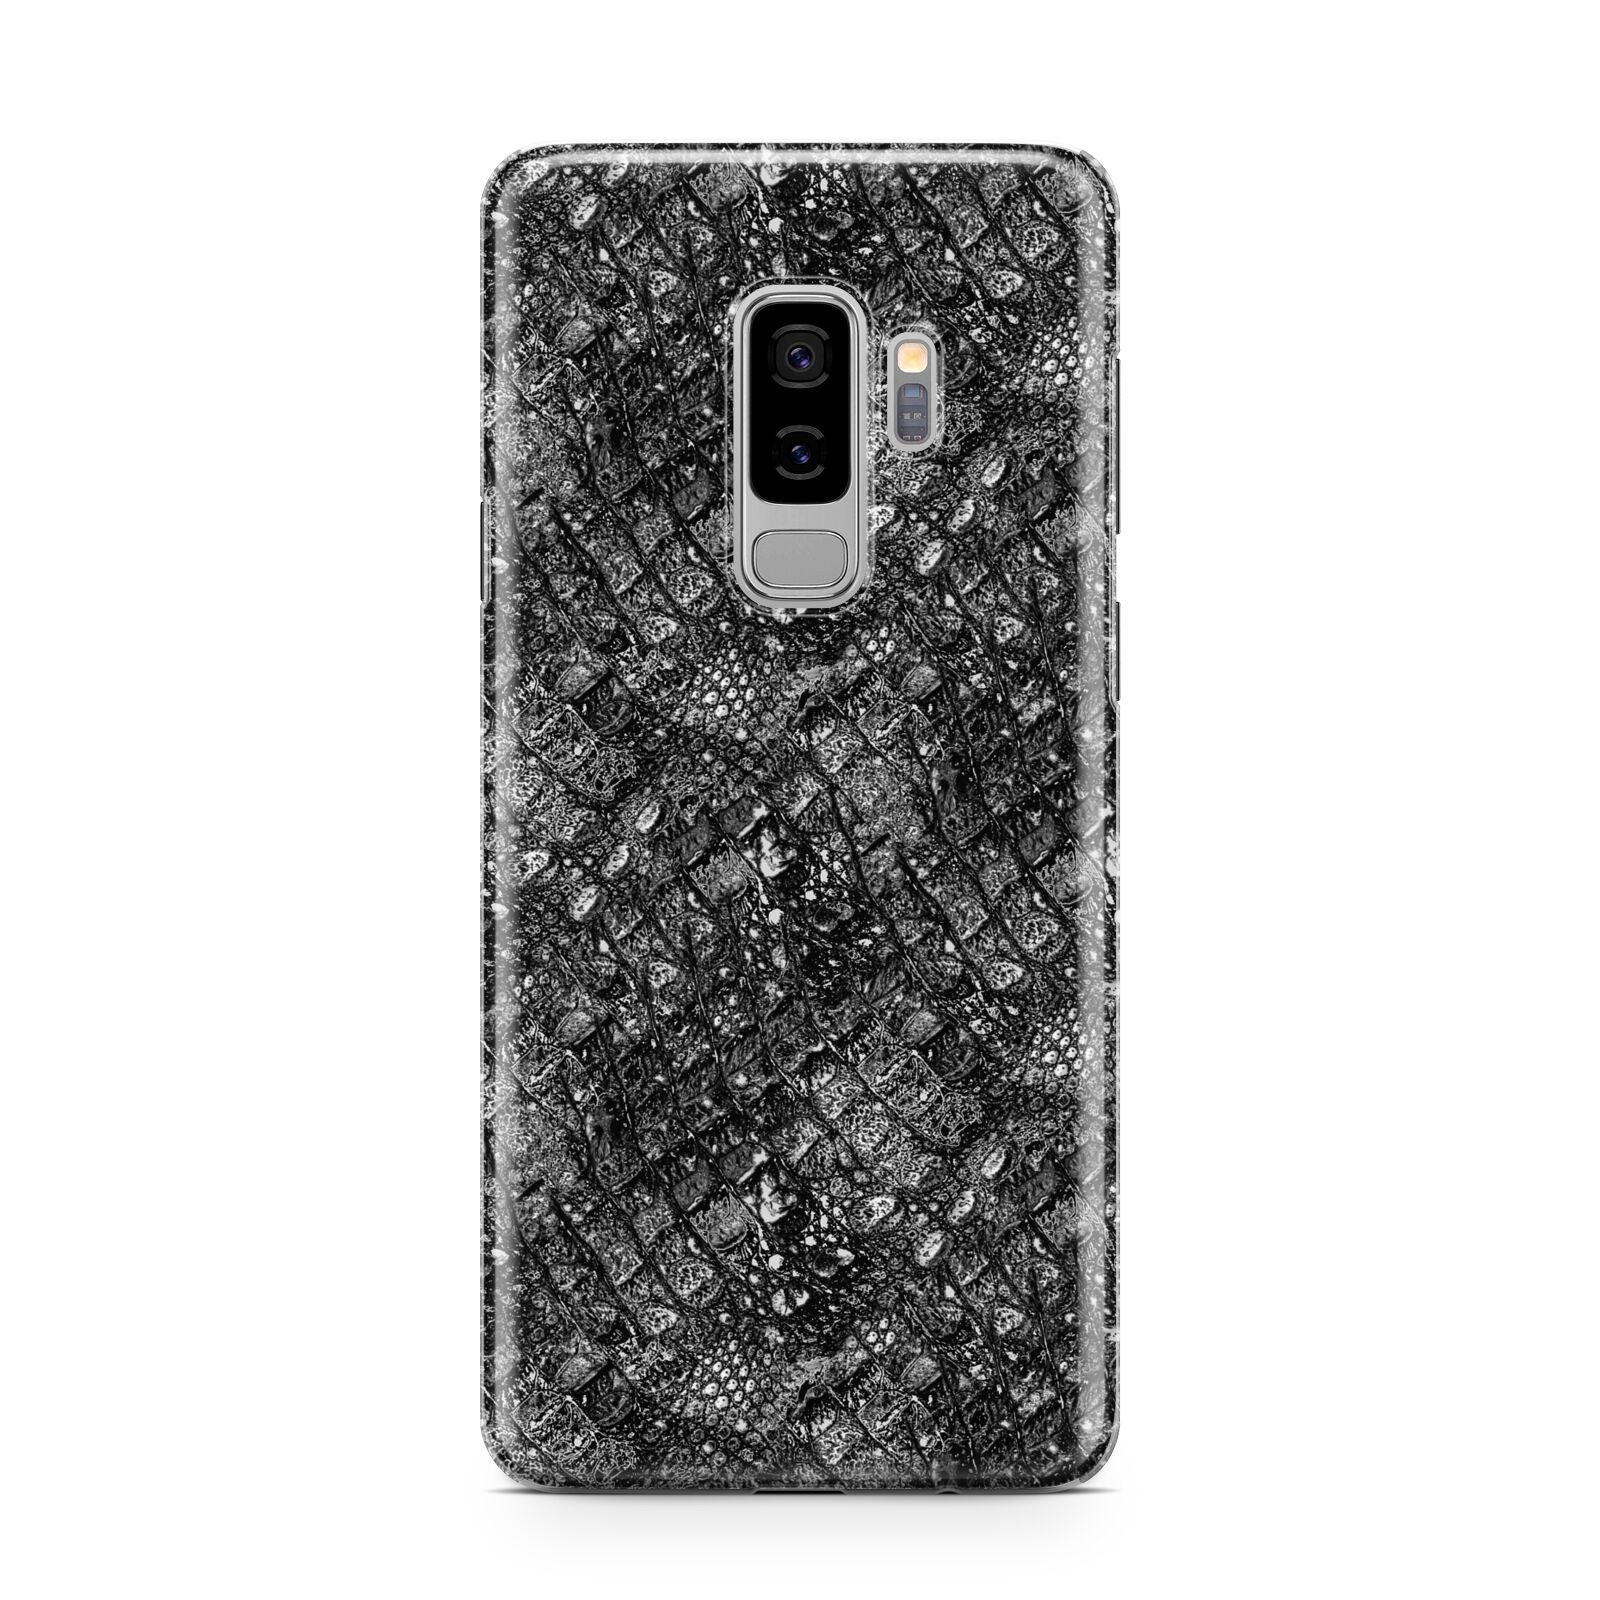 Snakeskin Design Samsung Galaxy S9 Plus Case on Silver phone